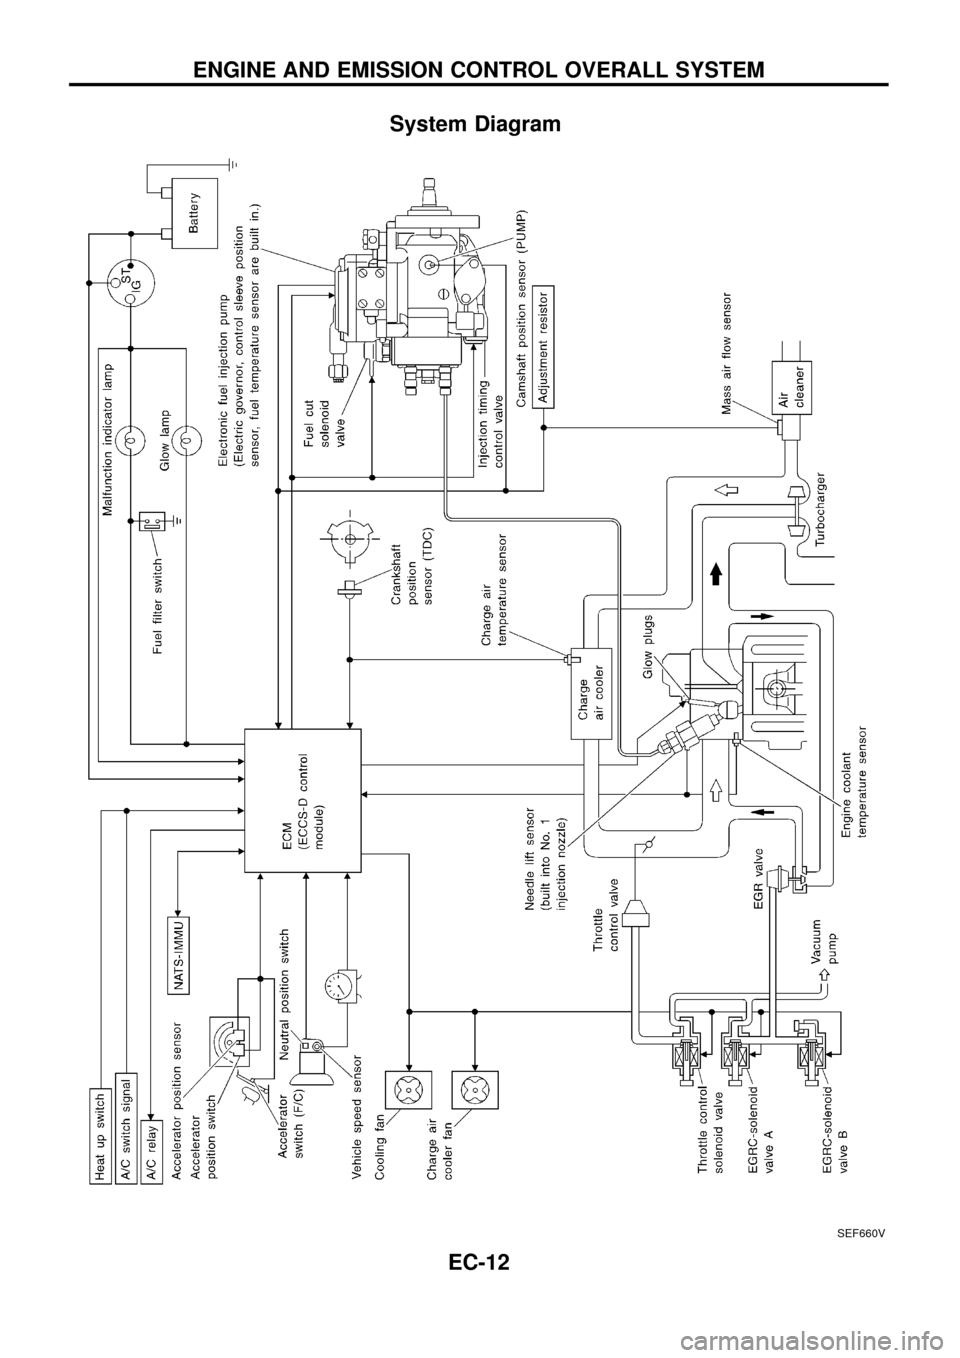 NISSAN PATROL 1998 Y61 / 5.G Engine Control Workshop Manual System Diagram
SEF660V
ENGINE AND EMISSION CONTROL OVERALL SYSTEM
EC-12 